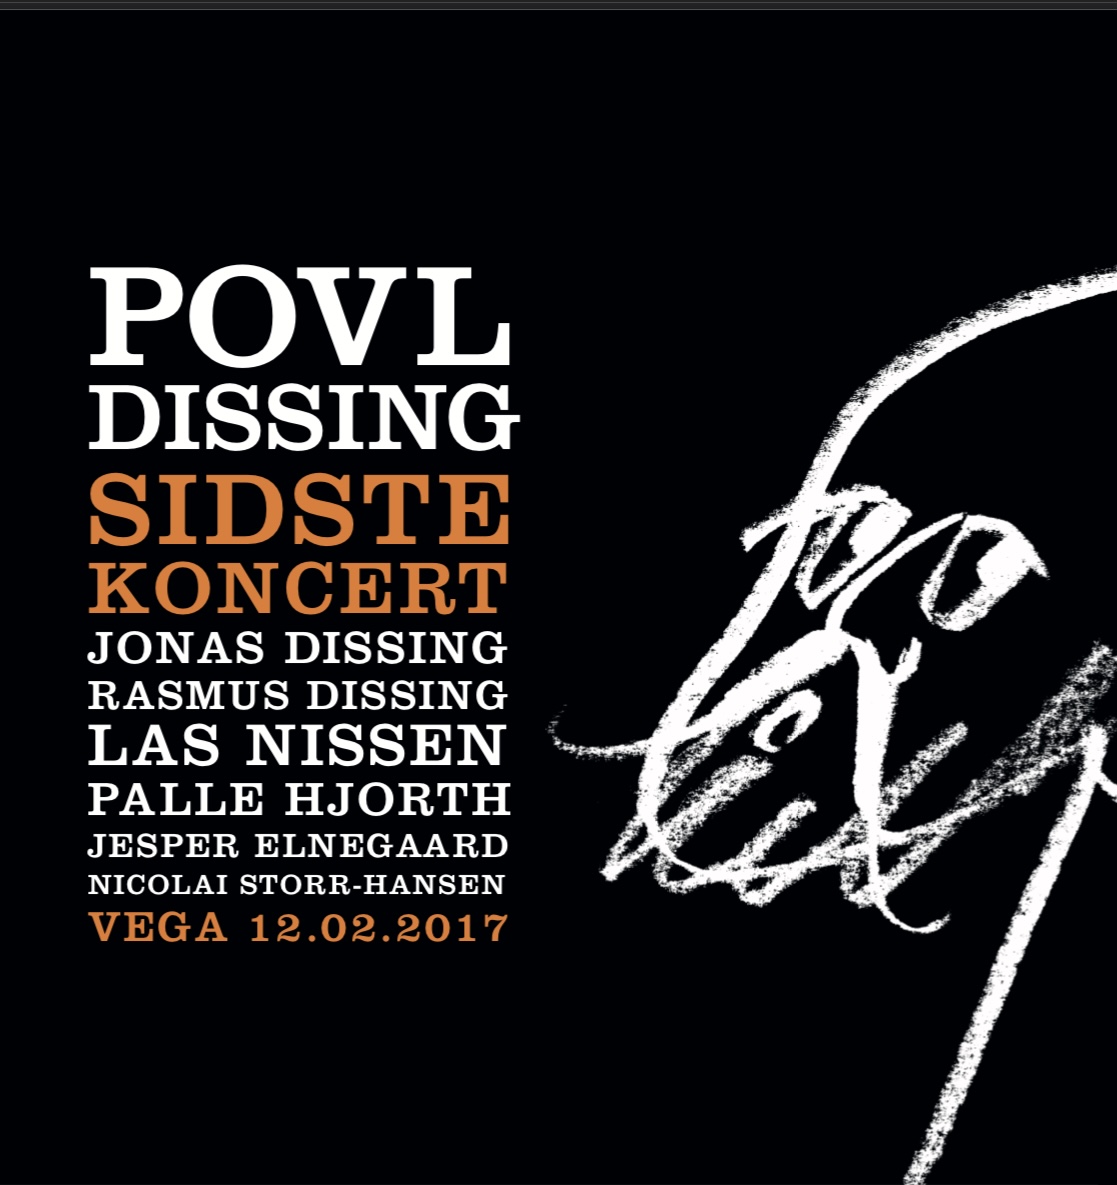 Povl Dissing sidste koncert kommer på vinyl